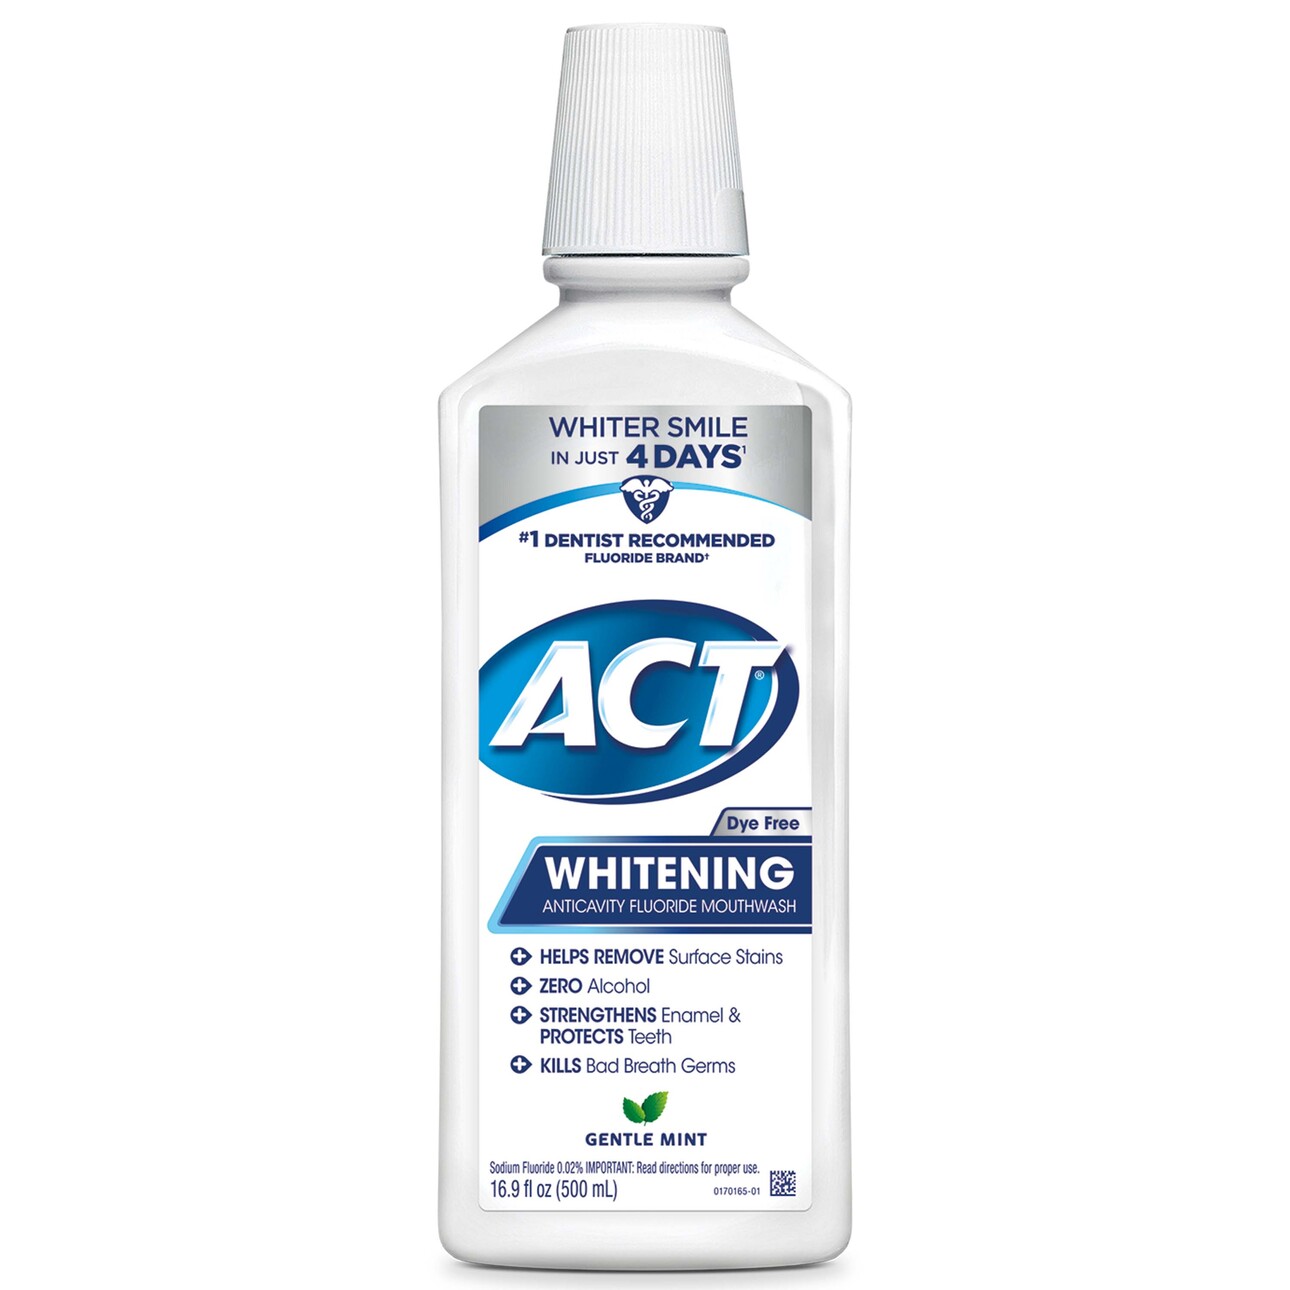 ACT Whitening + Anticavity Fluoride Mouthwash, Gentle Mint, Alcohol Free and Dye Free, 16.9 fl. oz. - image 3 of 9